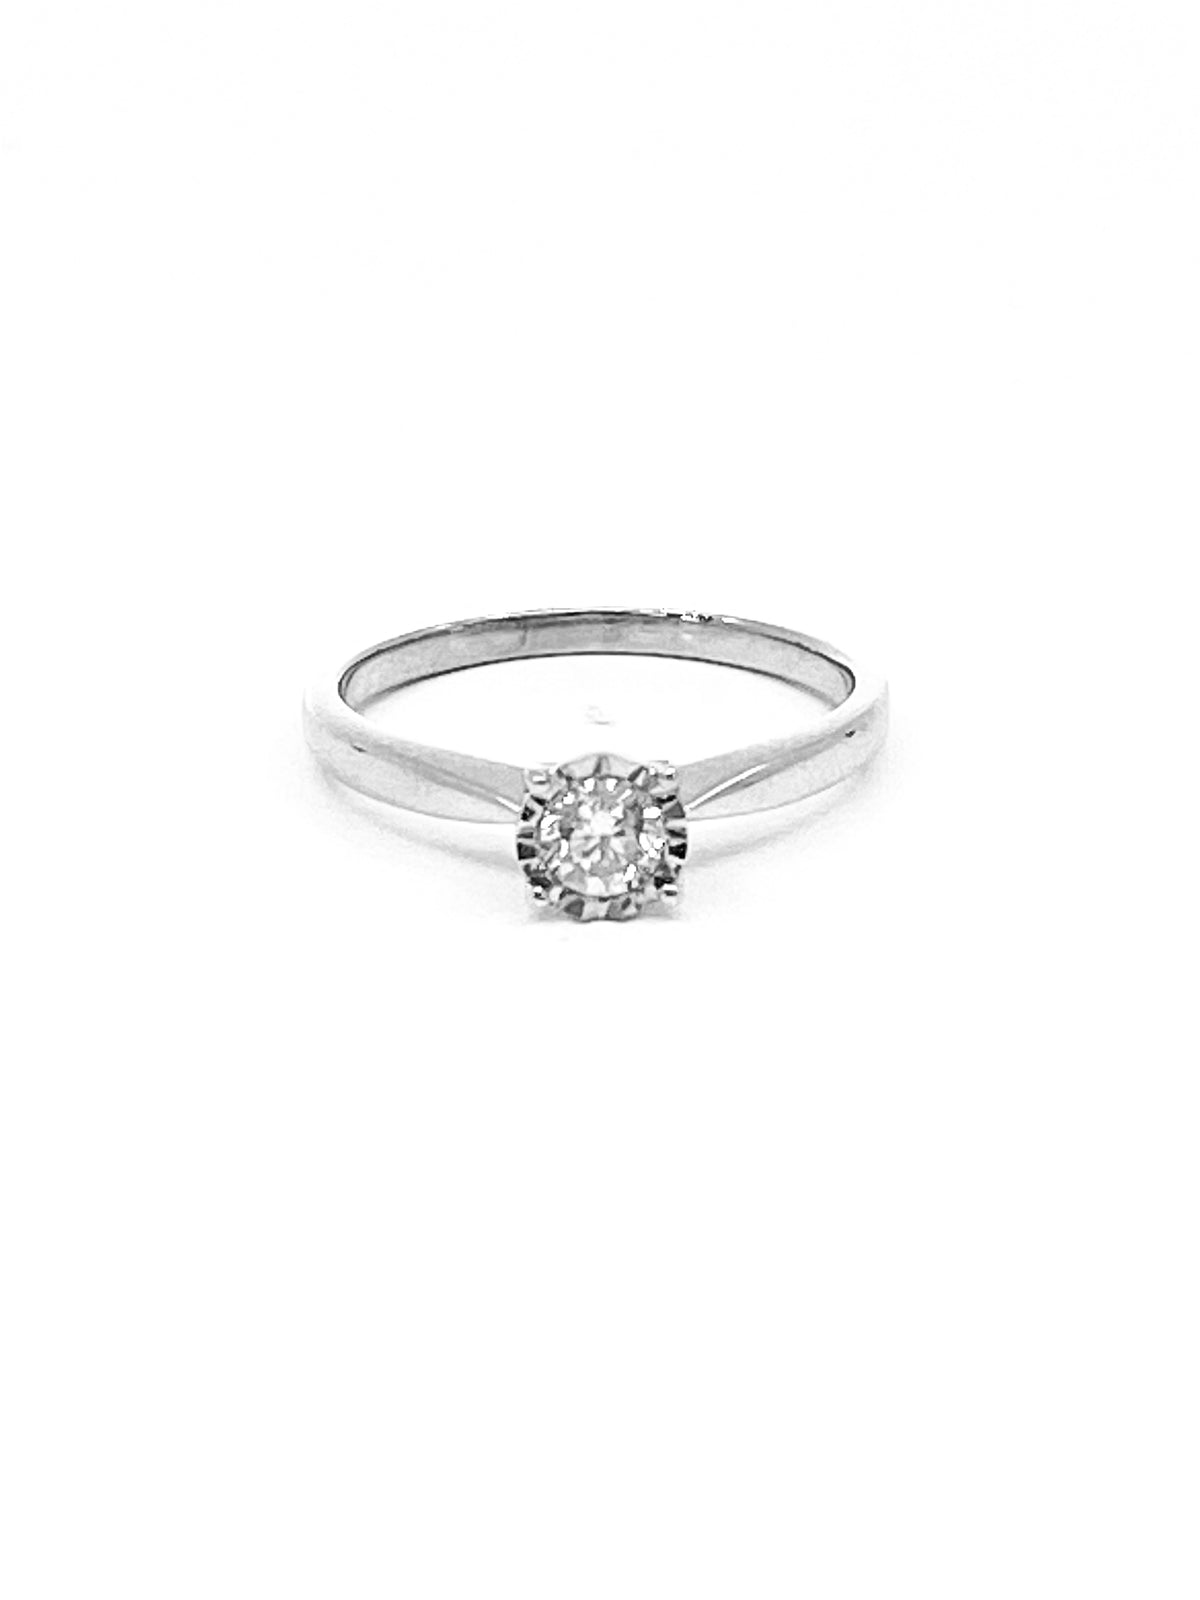 10K White Gold 0.25cttw Round Brilliant Cut Diamond Engagement Ring, size 6.5